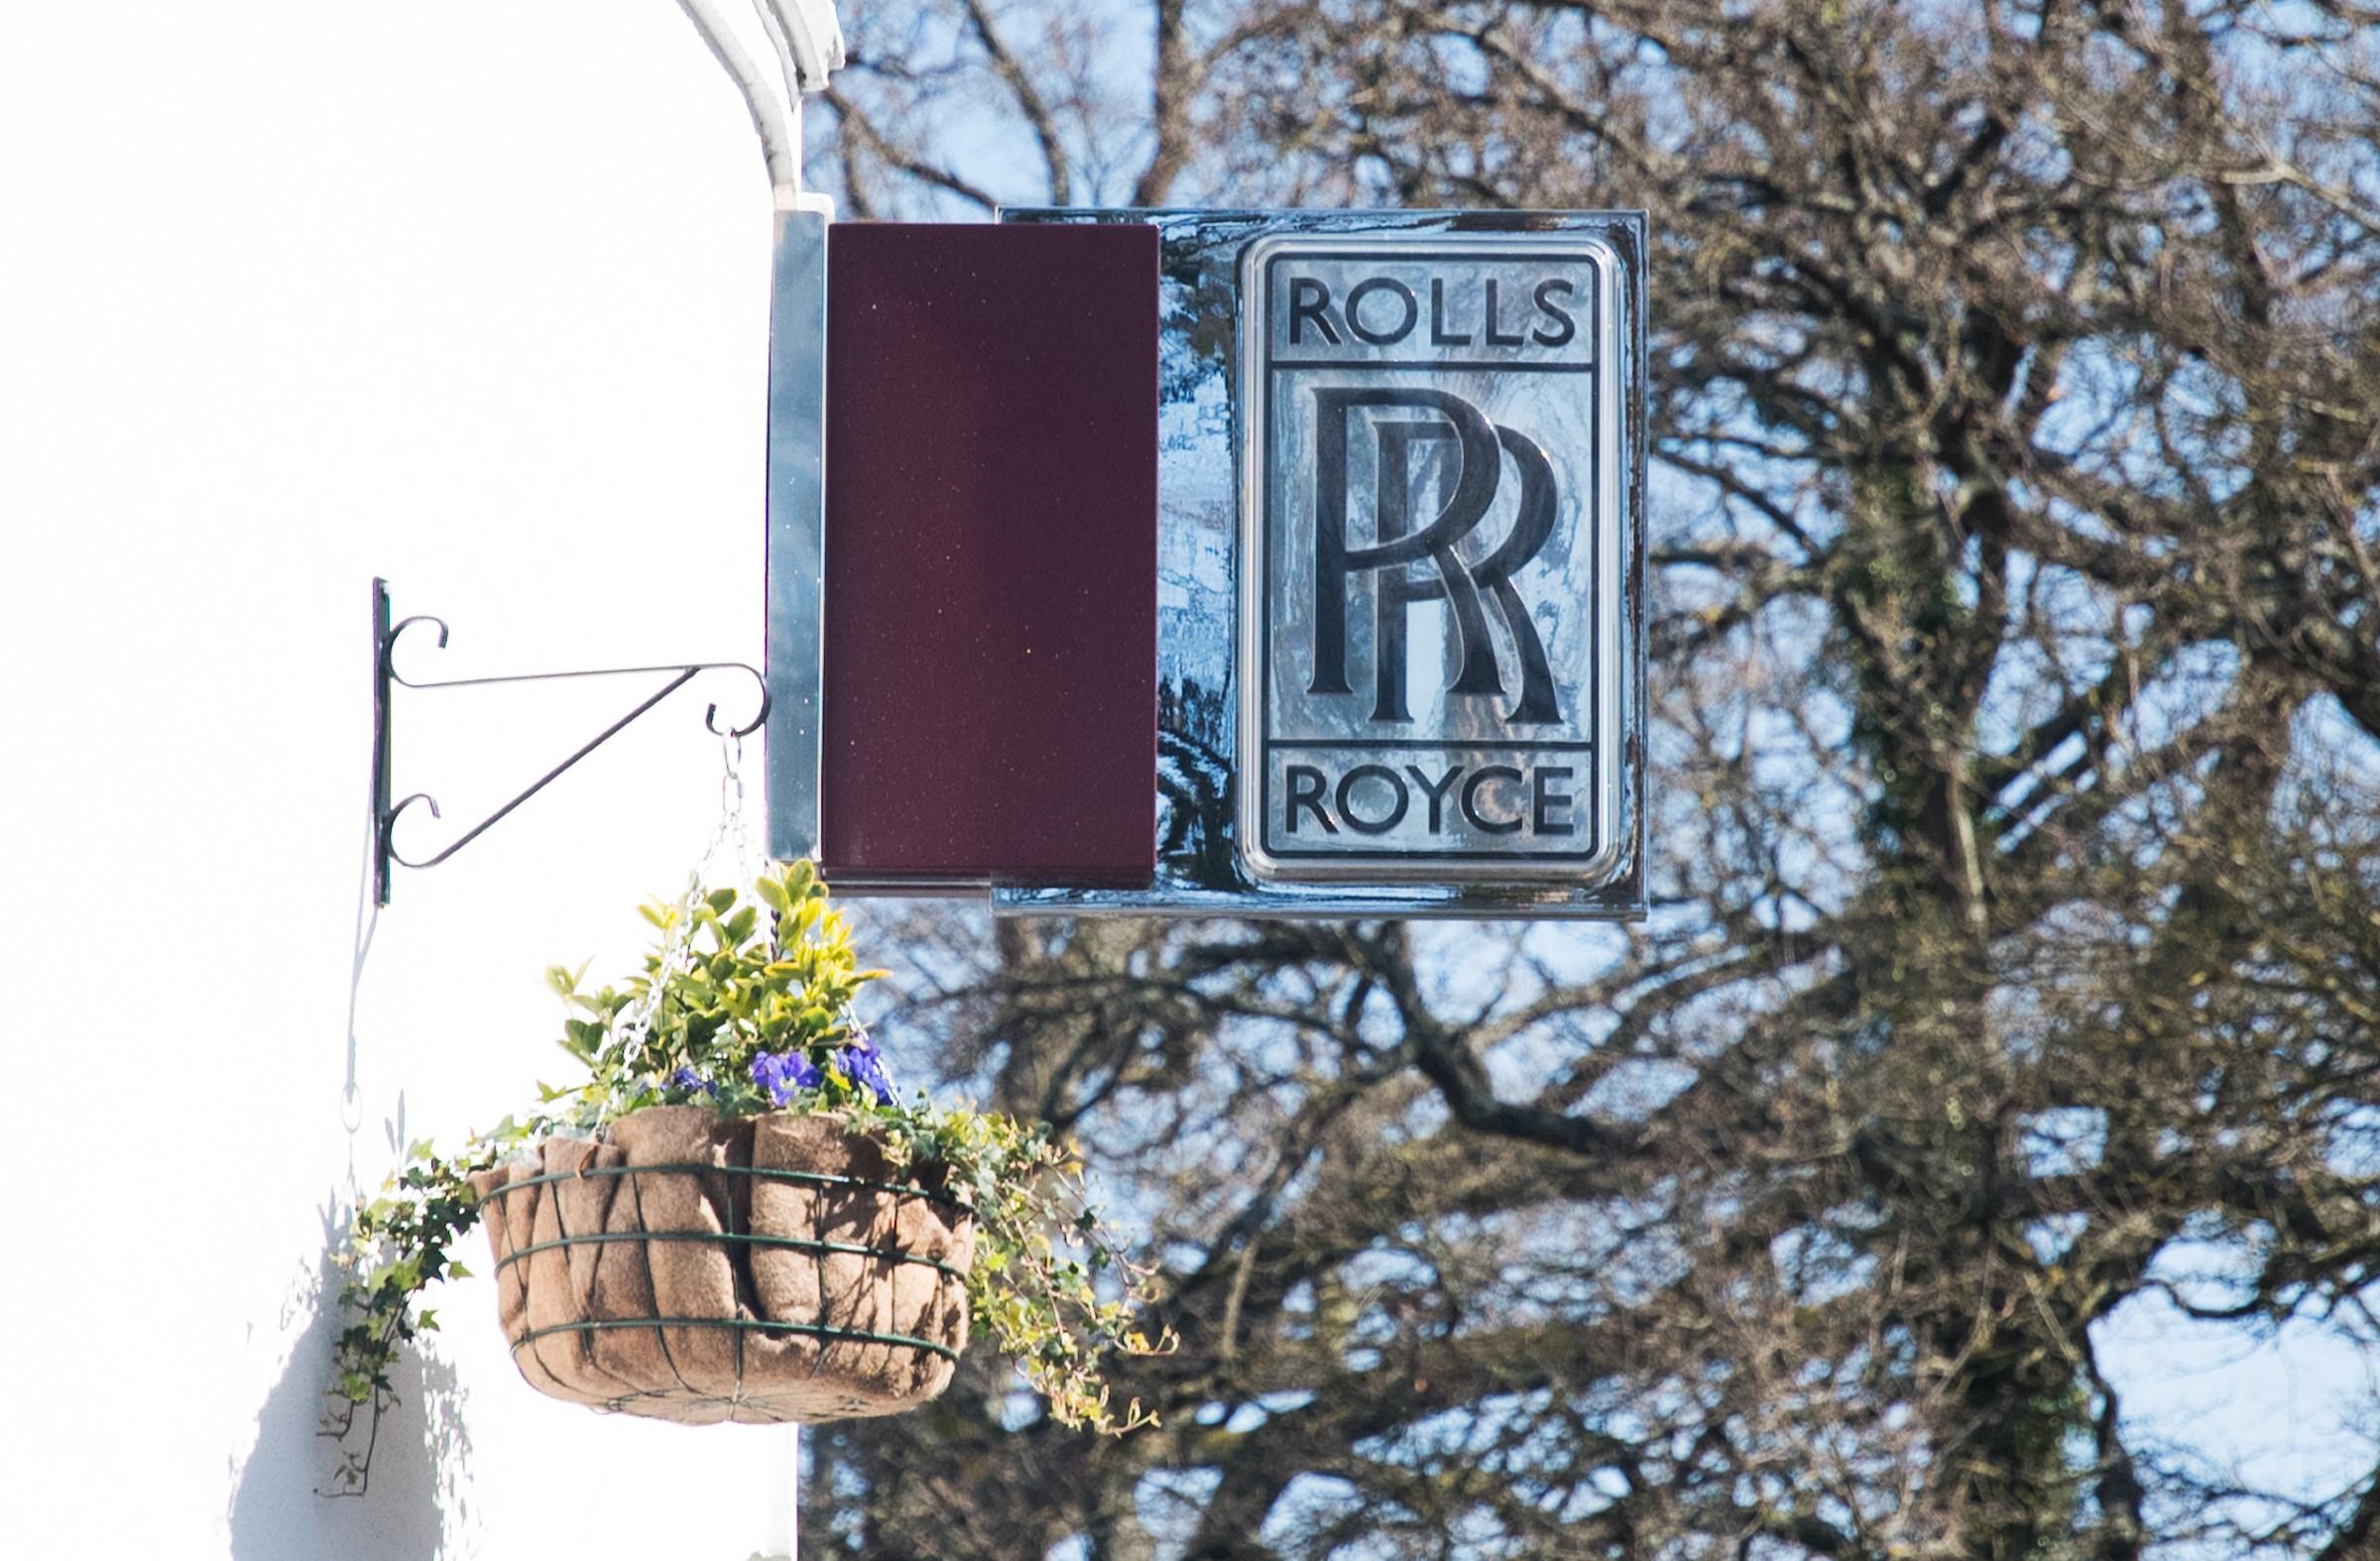 Images Rolls-Royce Motor Cars Sunningdale